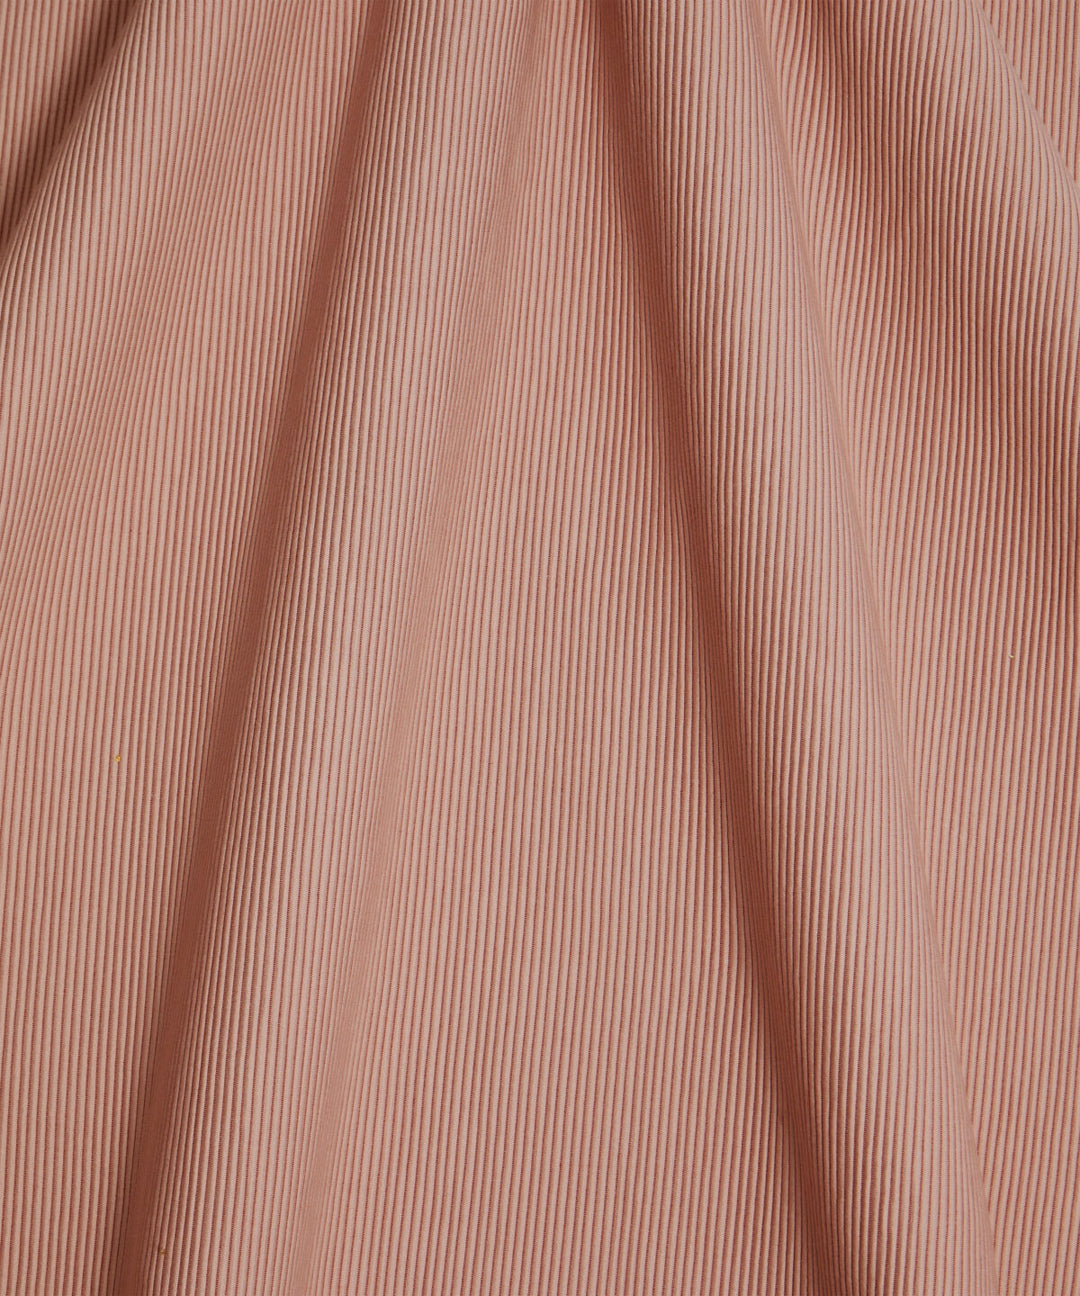 Liberty Fabrics Ottoman Stripe Ointment 0873021L